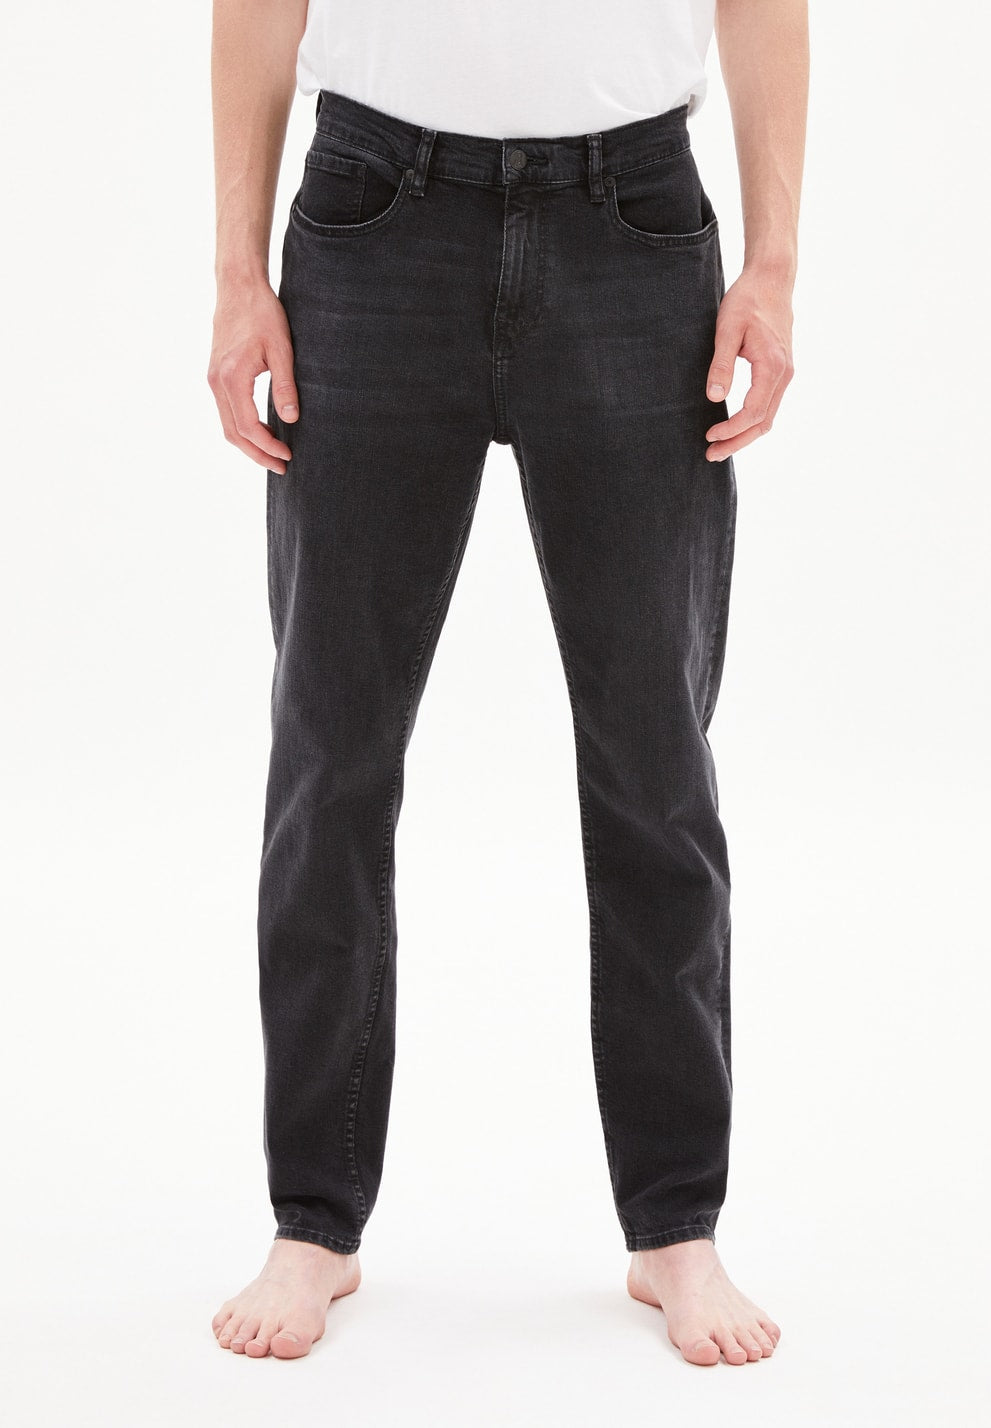 Armedangels - M's Aarjo Tarpa Jeans - Tapered Fit Denim - Organic cotton - Weekendbee - sustainable sportswear